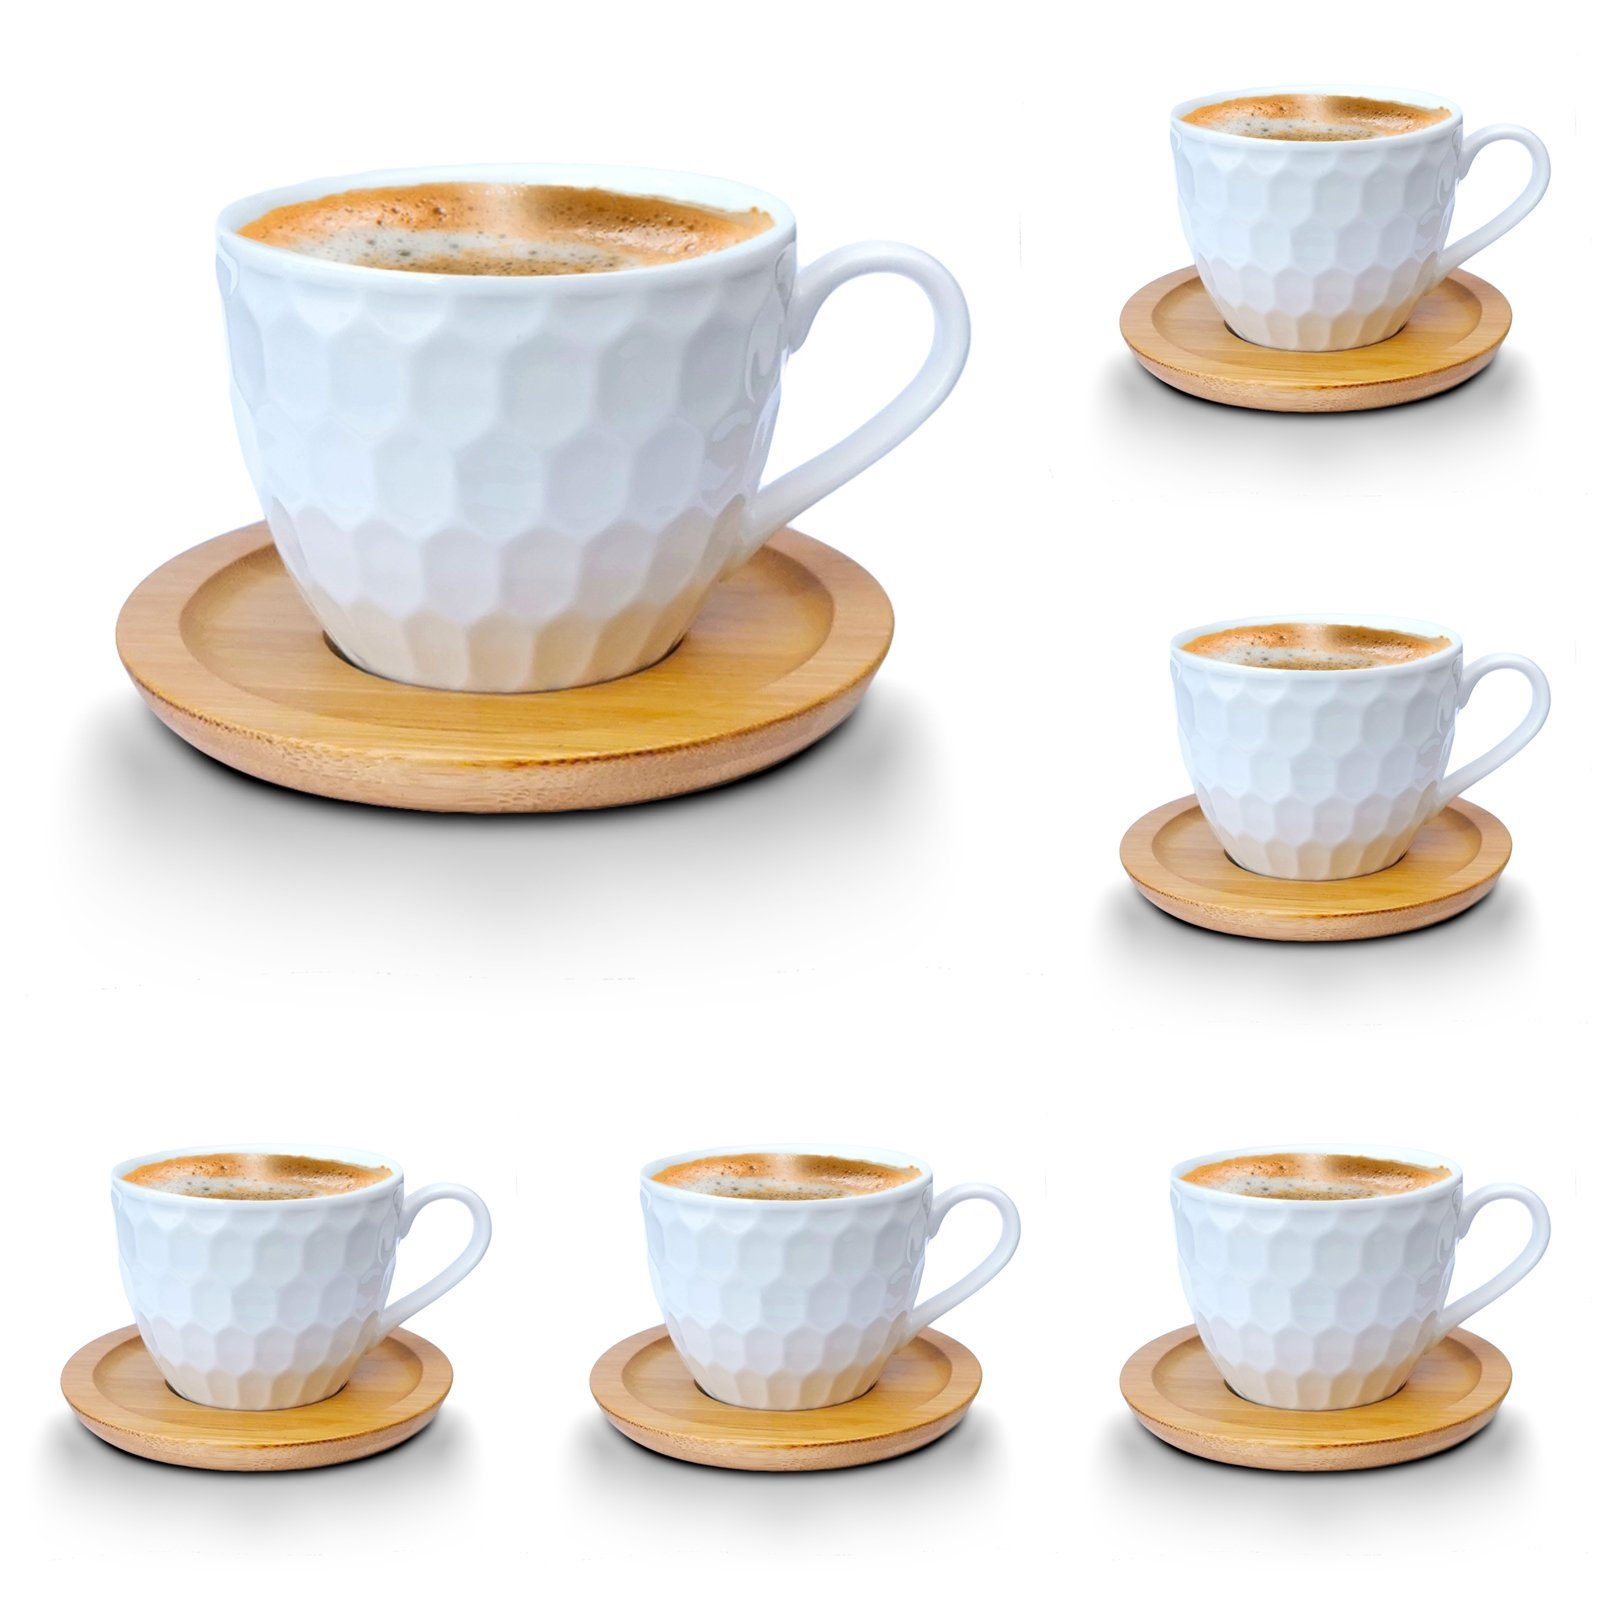 Melody Tasse Porzellan Tassen Set Teeservice Kaffeeservice mit Untertassen 12-Teilig, Porzellan, Espressotassen, 6er-Set, mit Untertassen Mod2